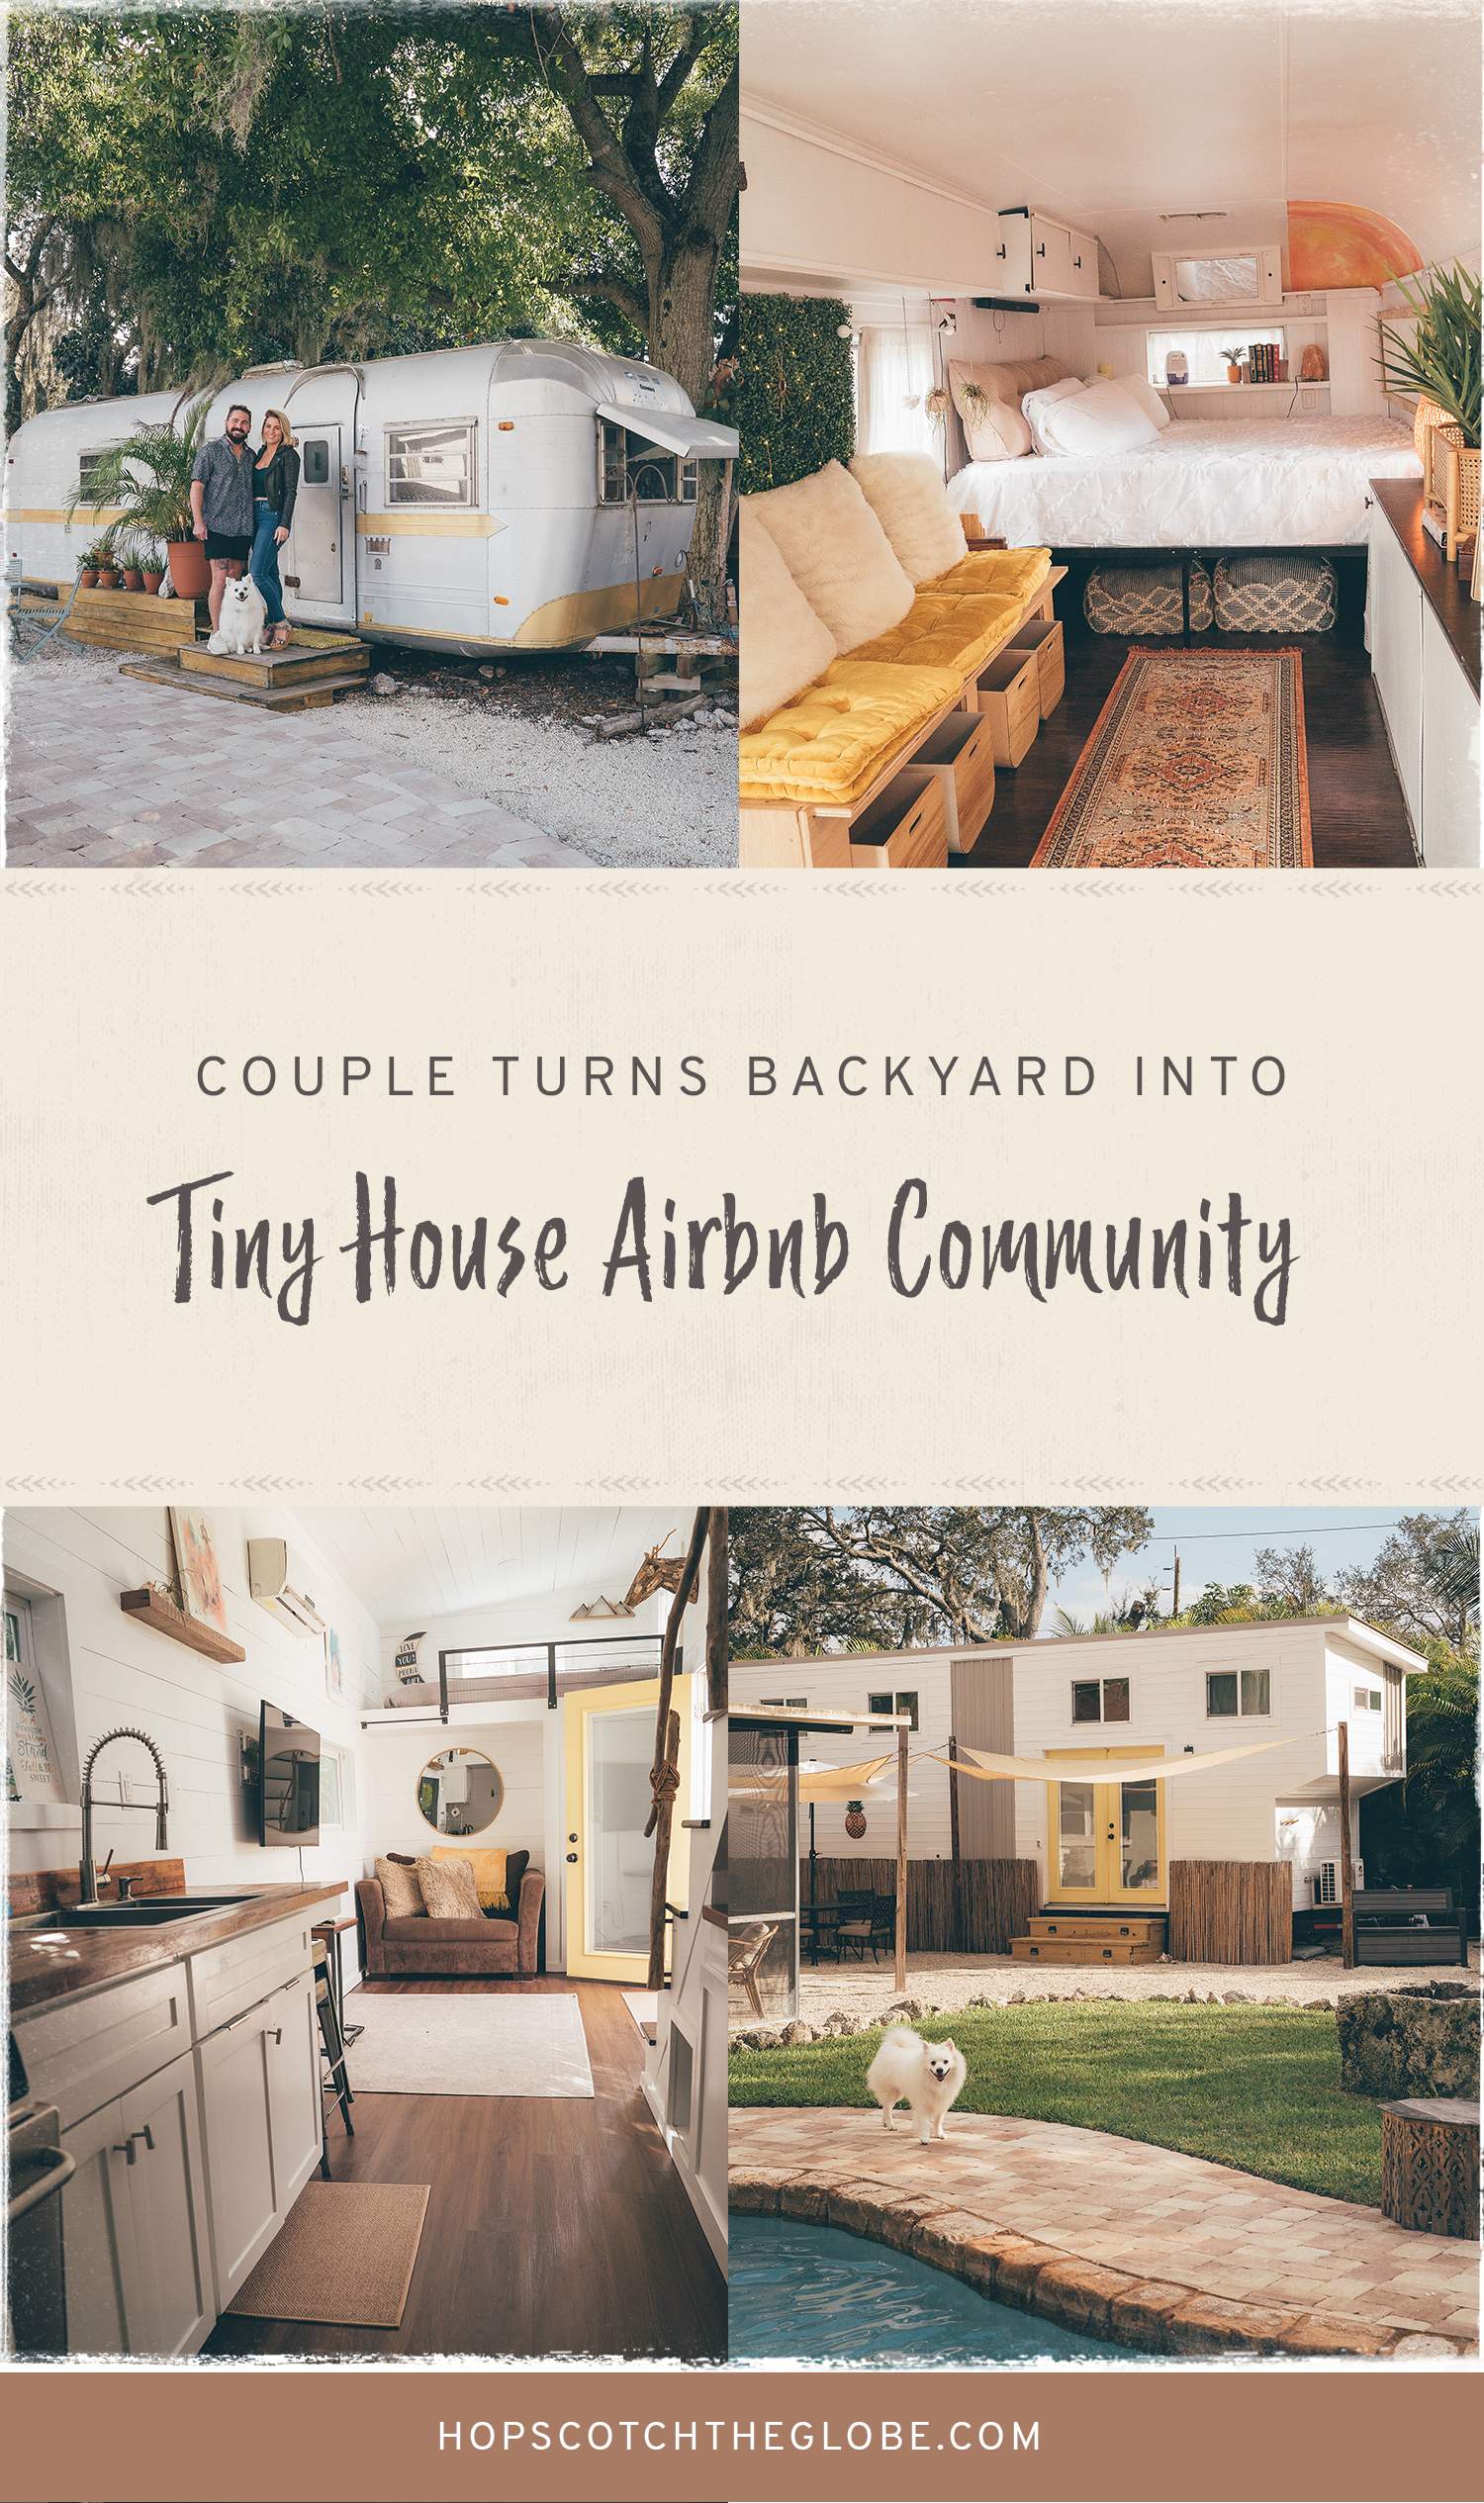 https://hopscotchtheglobe.com/wp-content/uploads/2021/11/Couple-turns-backyard-into-tiny-house-community.jpg